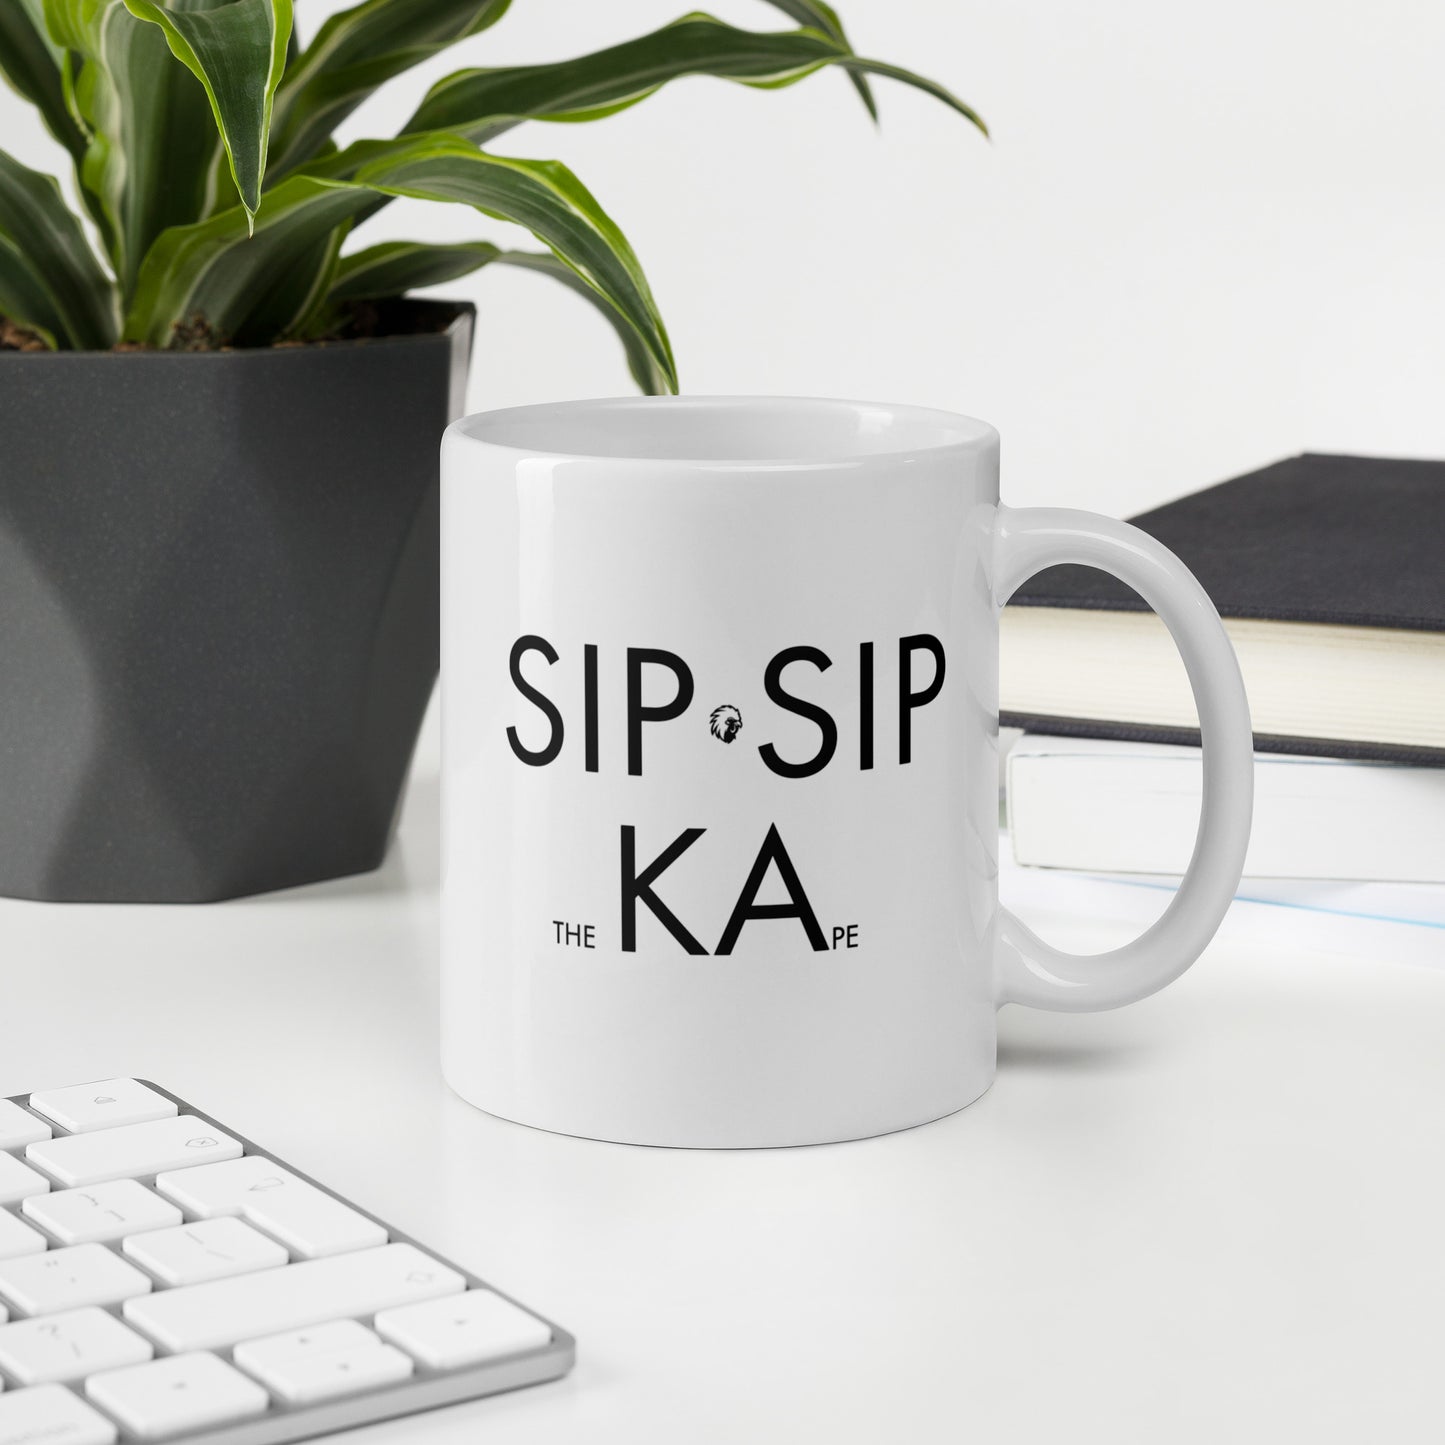 "Sip Sip Ka" Coffee Mug